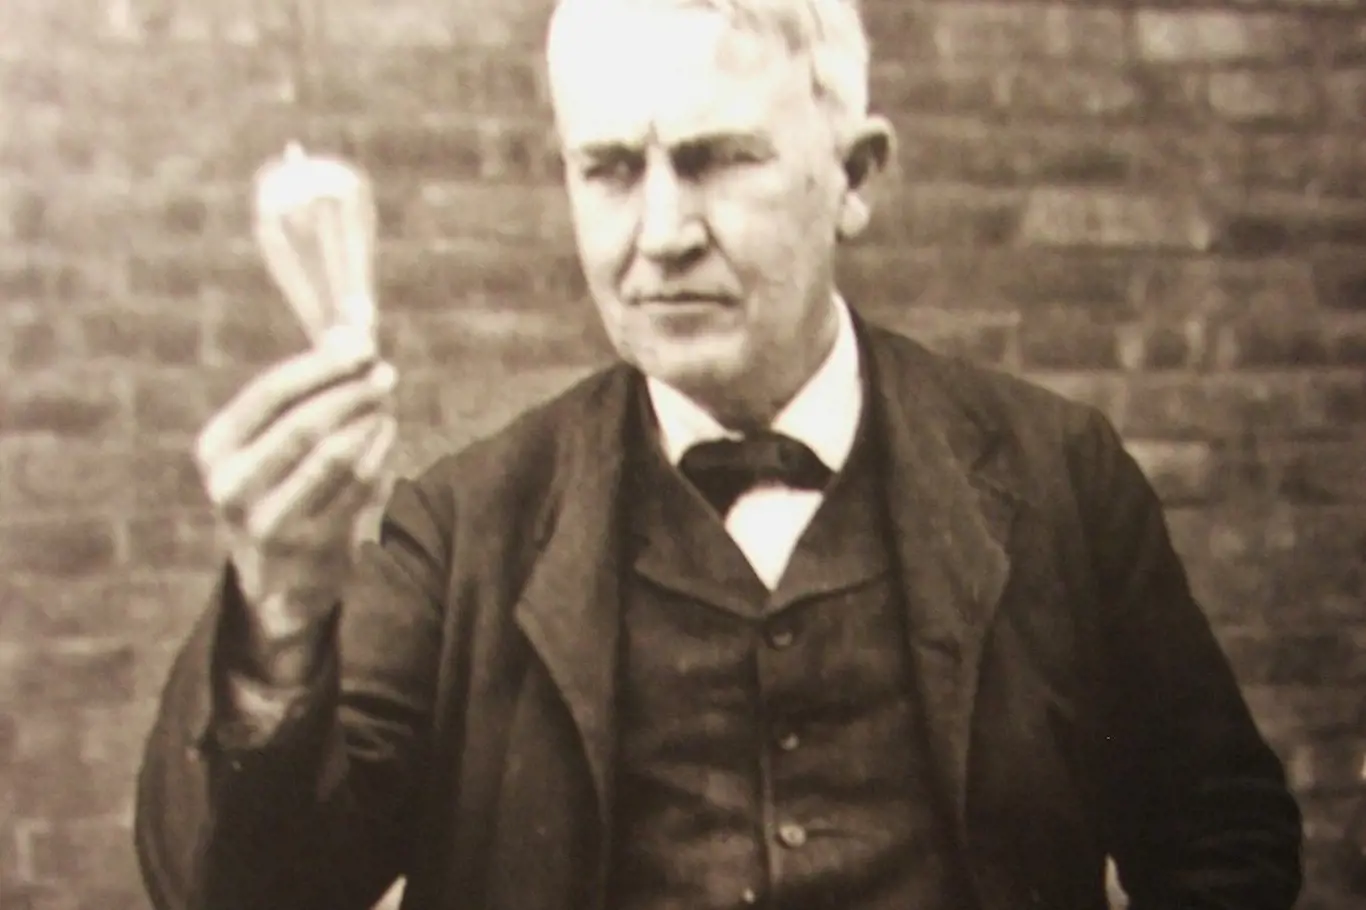 Thomas Alva Edison a jeho žárovka